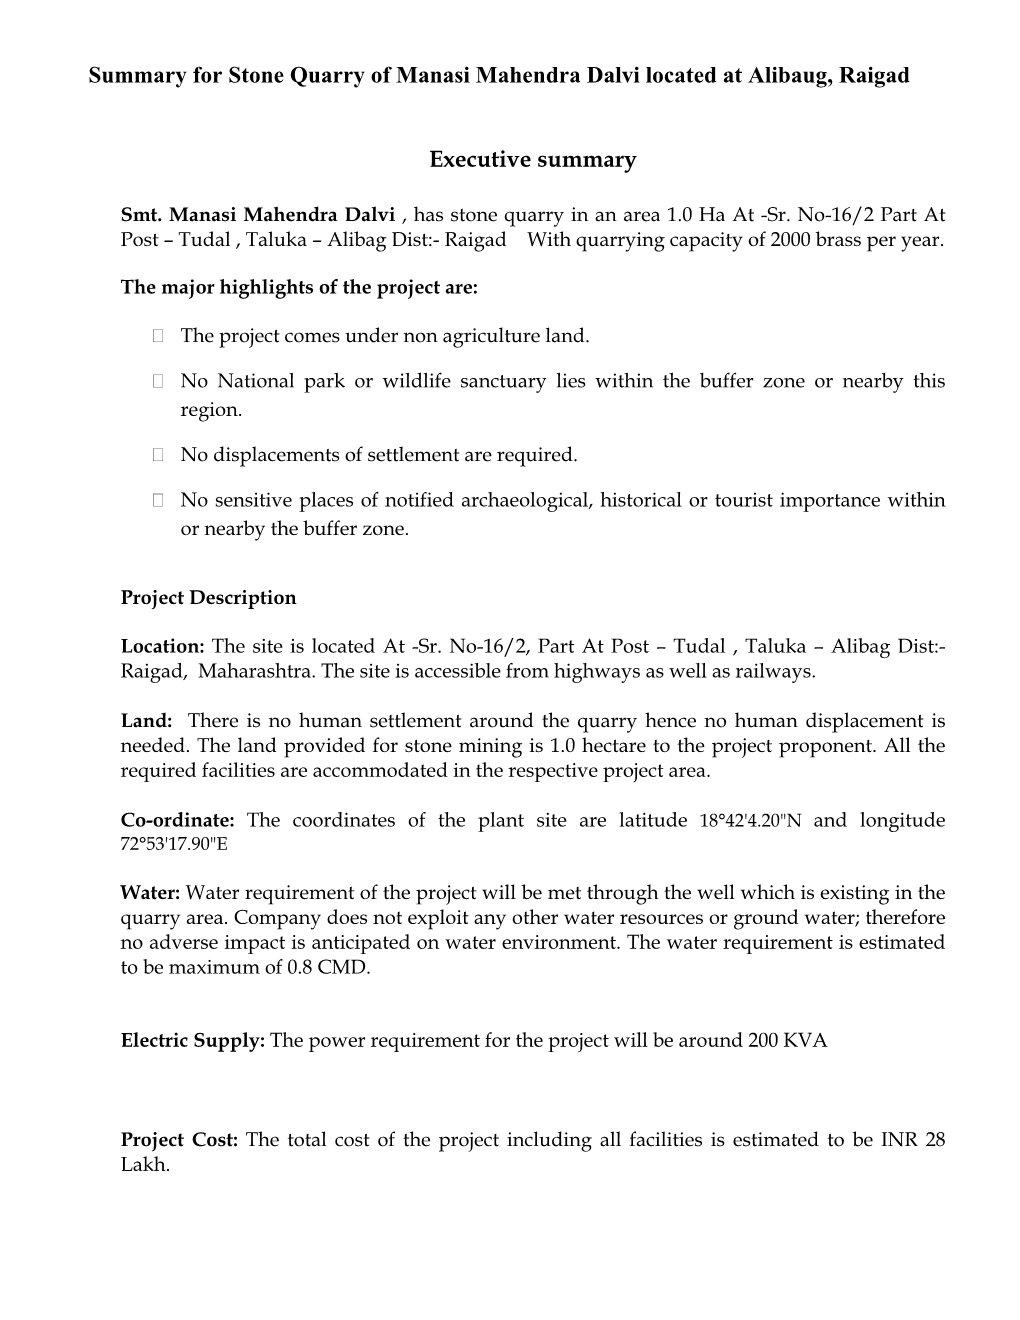 Summary for Stone Quarry of Manasi Mahendra Dalvi Located at Alibaug, Raigad